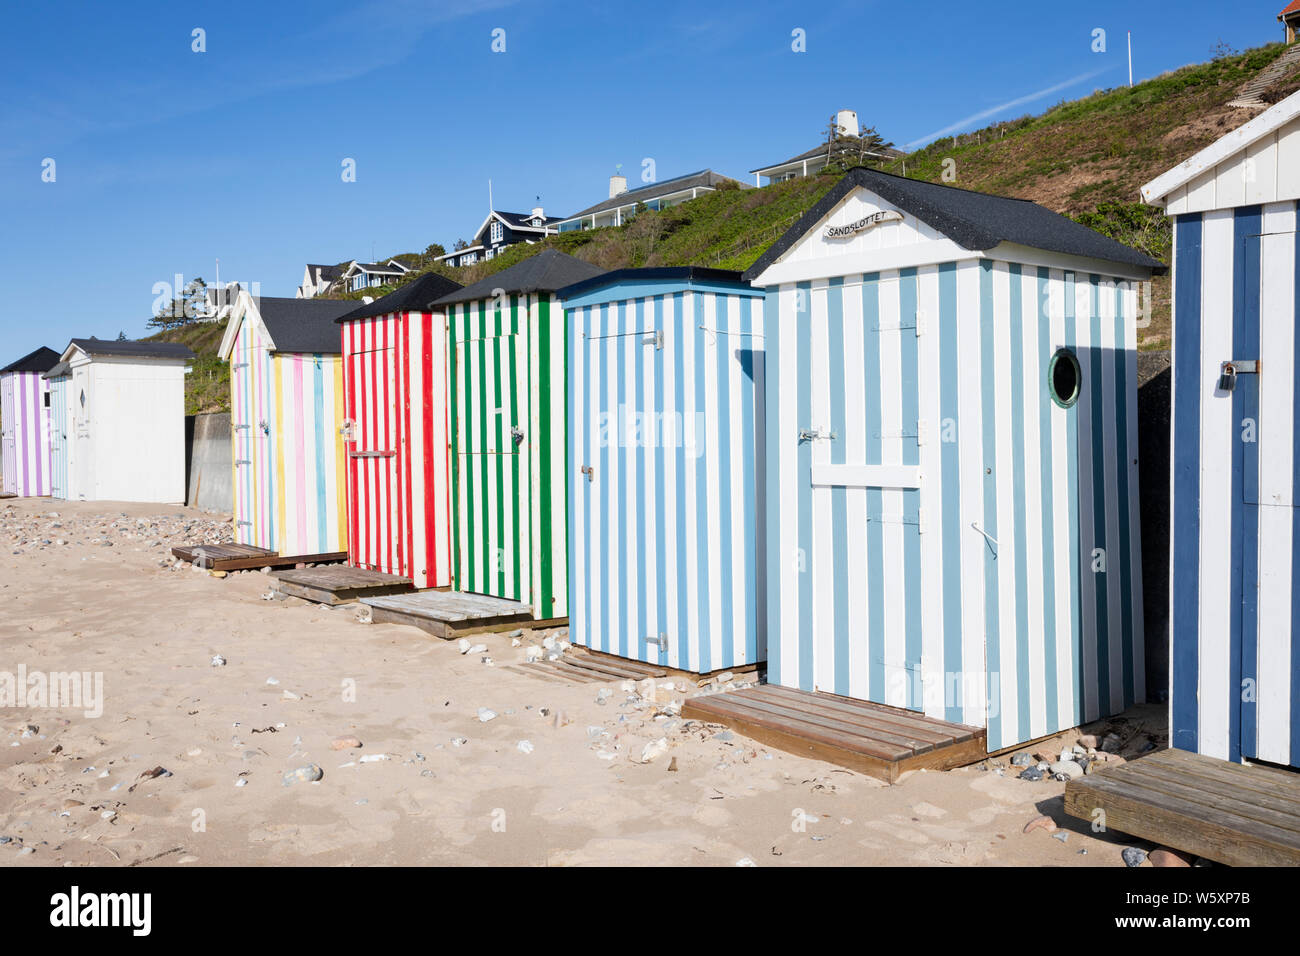 Bunten Badekabinen am Strand entlang in Rageleje Strand, Rageleje, Region Hovedstaden, Neuseeland, Dänemark, Europa Stockfoto